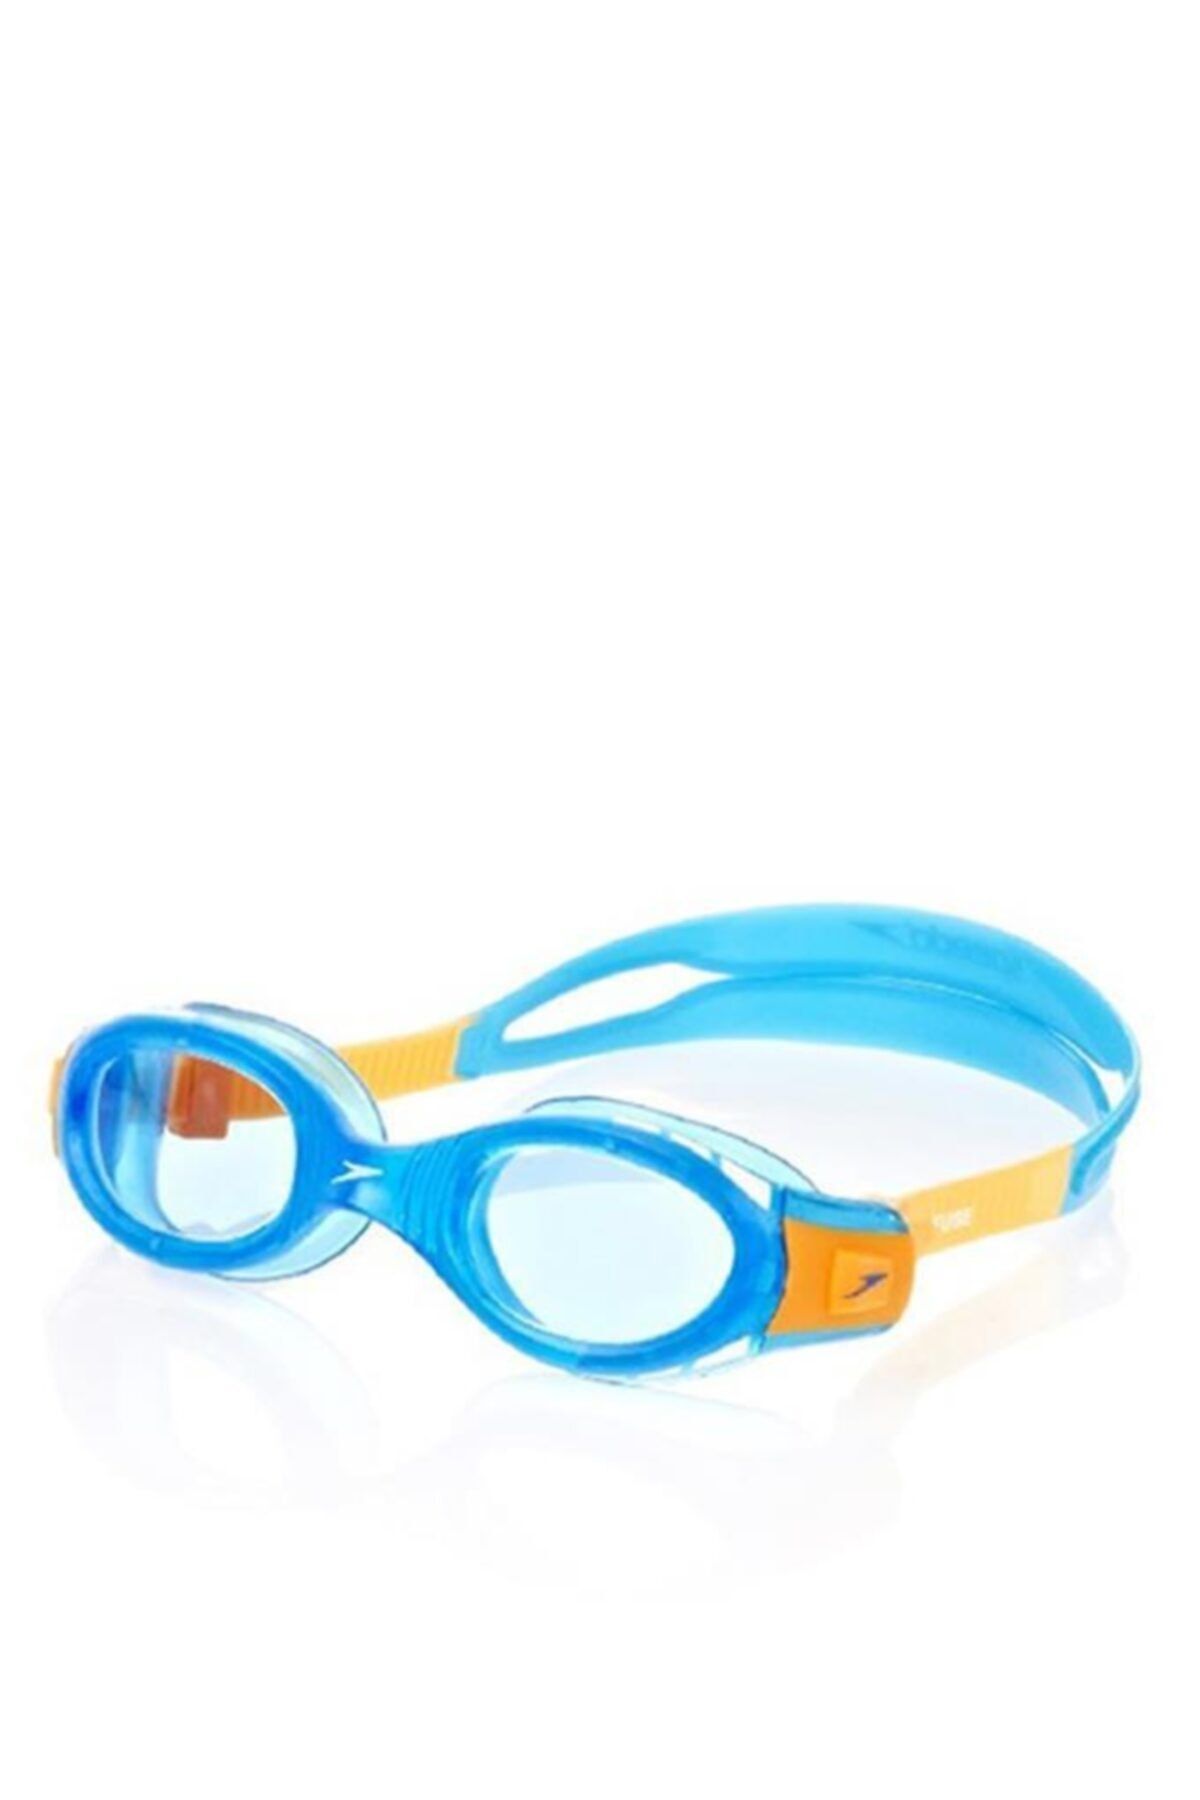 SPEEDO Futura Biofuse Junior Yüzücü Gözlüğü Mavi (8-012330000-m)